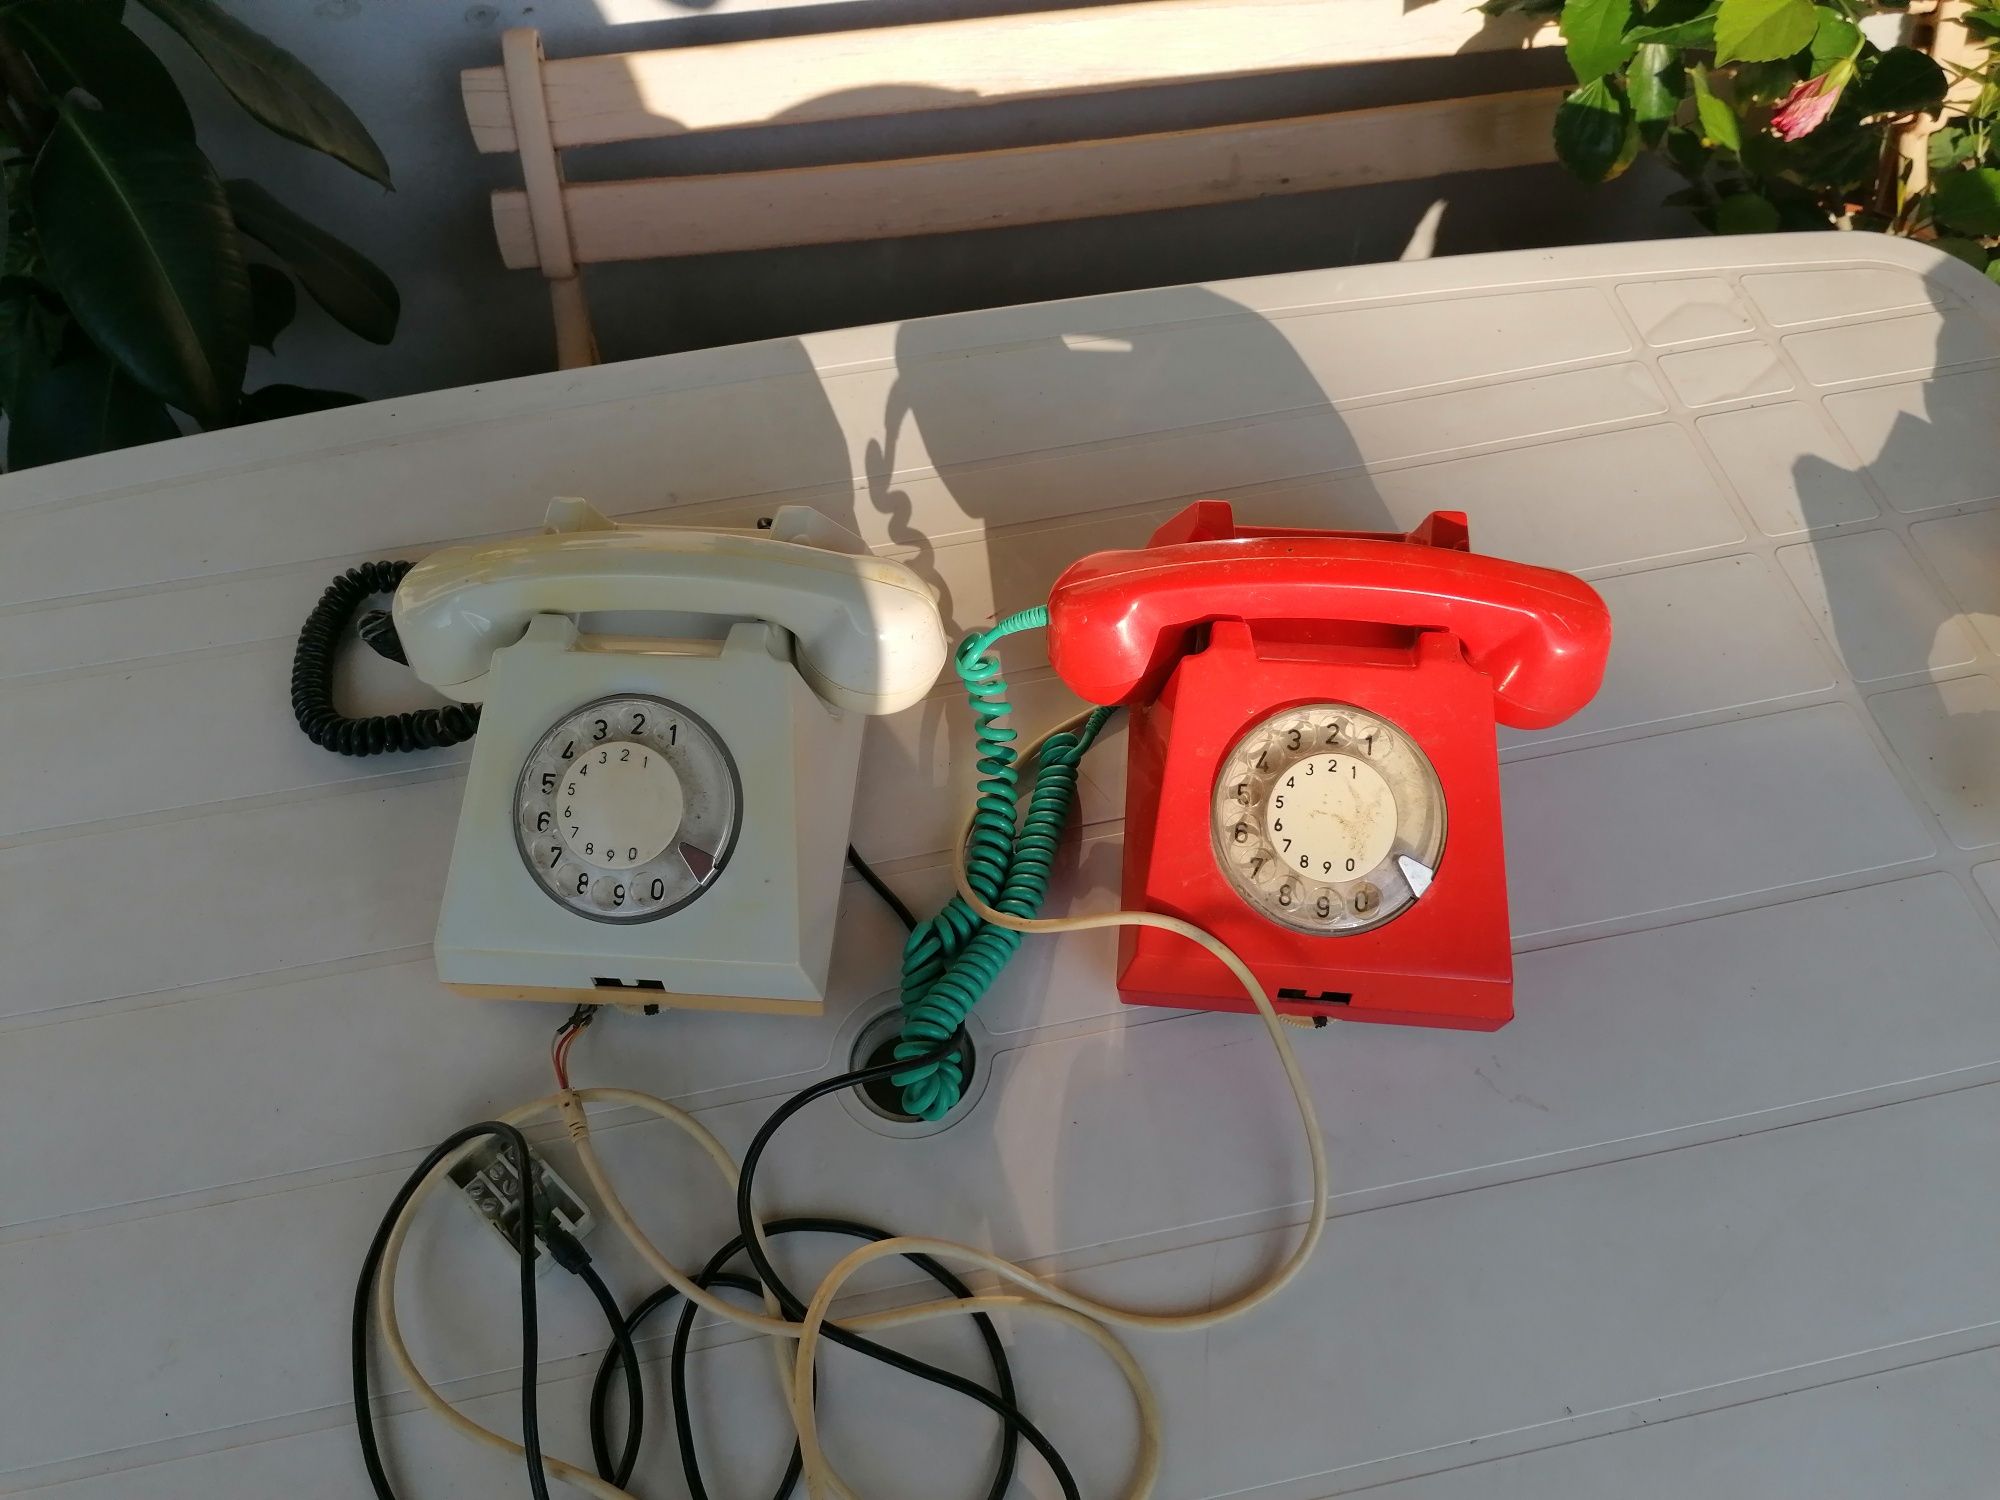 Telefoane vechi functionale